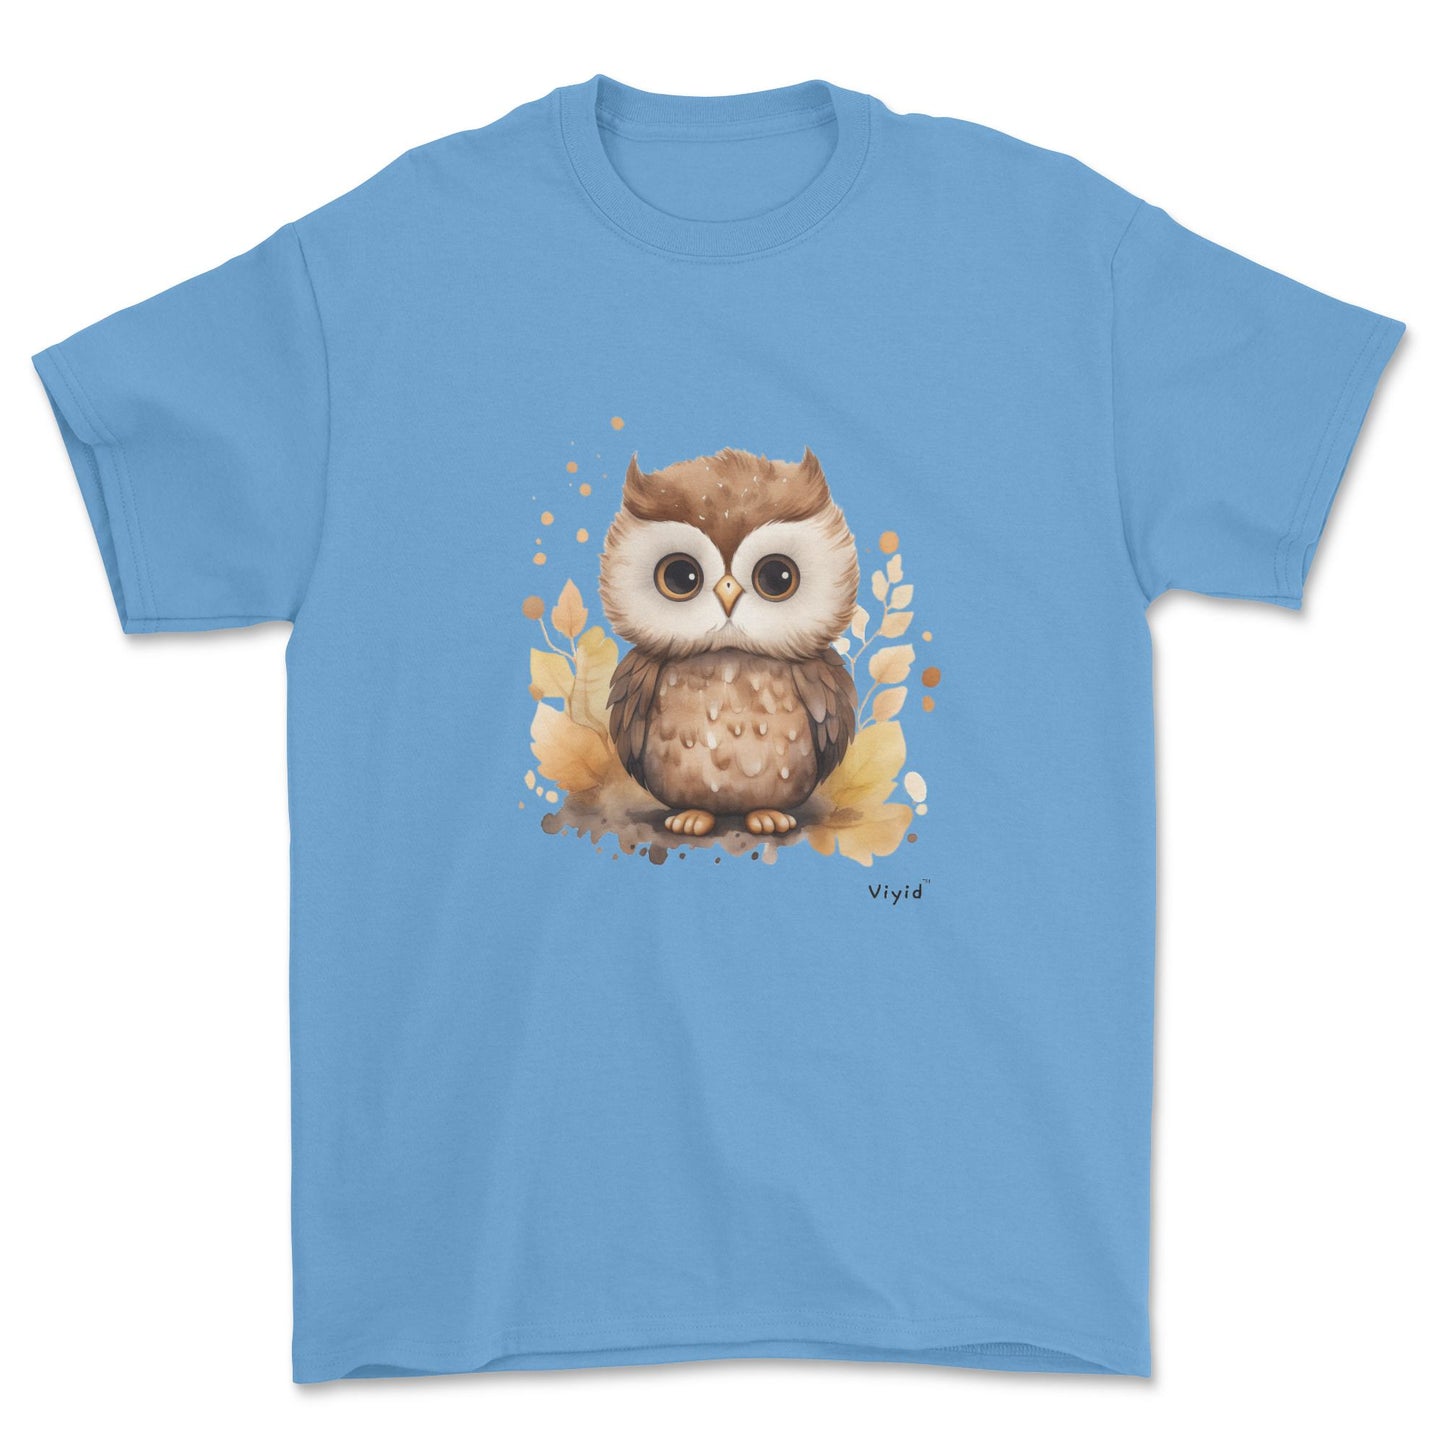 nocturnal owl youth t-shirt carolina blue